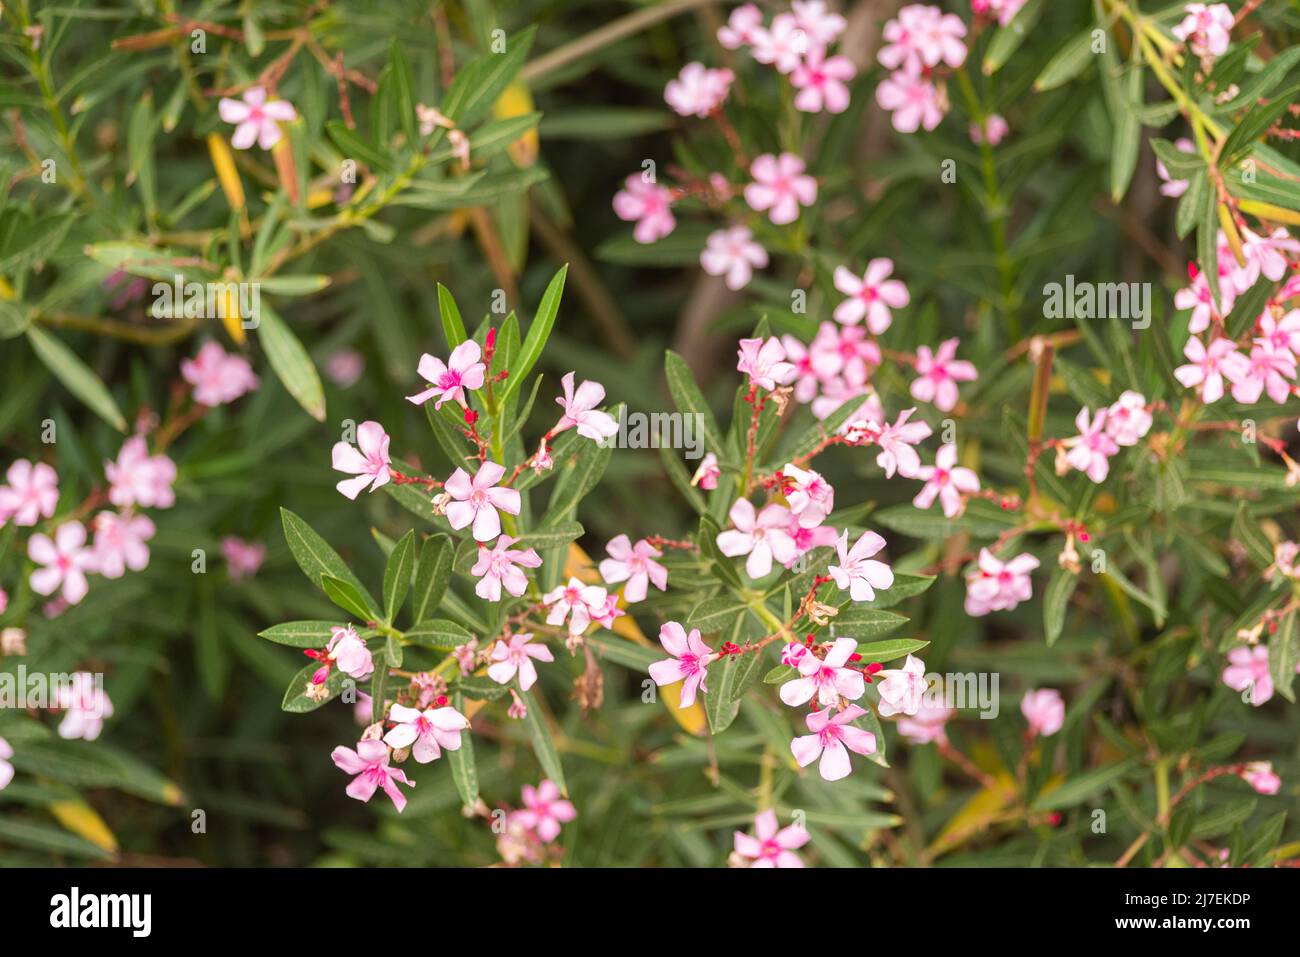 Blooming flowers of Saponaria vegetating in garden Stock Photo